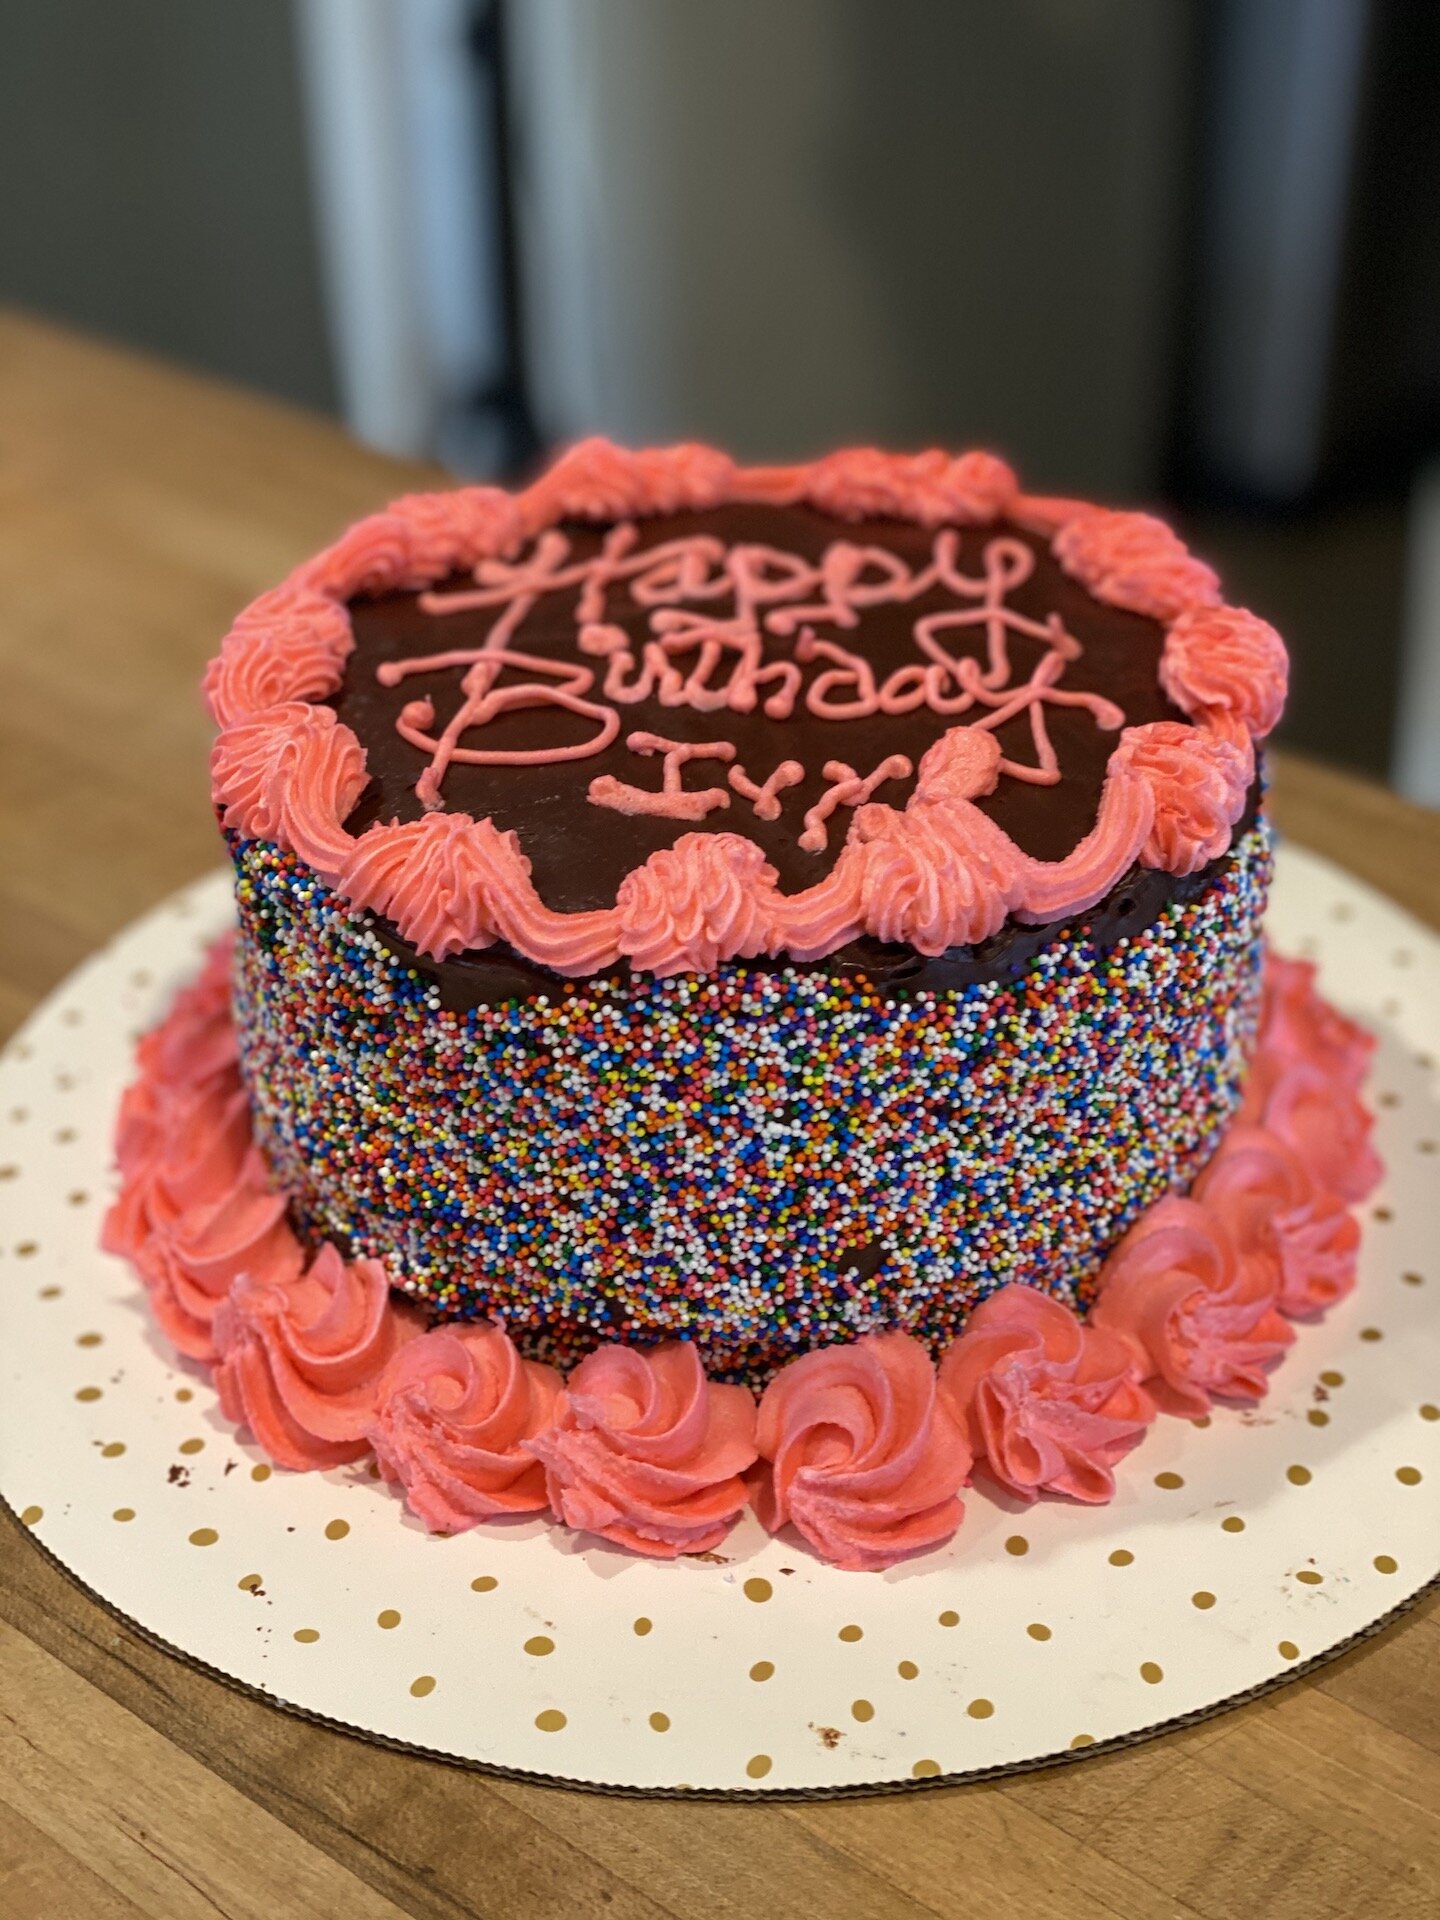 Surprise SweetFilled Birthday Cake Recipe  Sainsburys